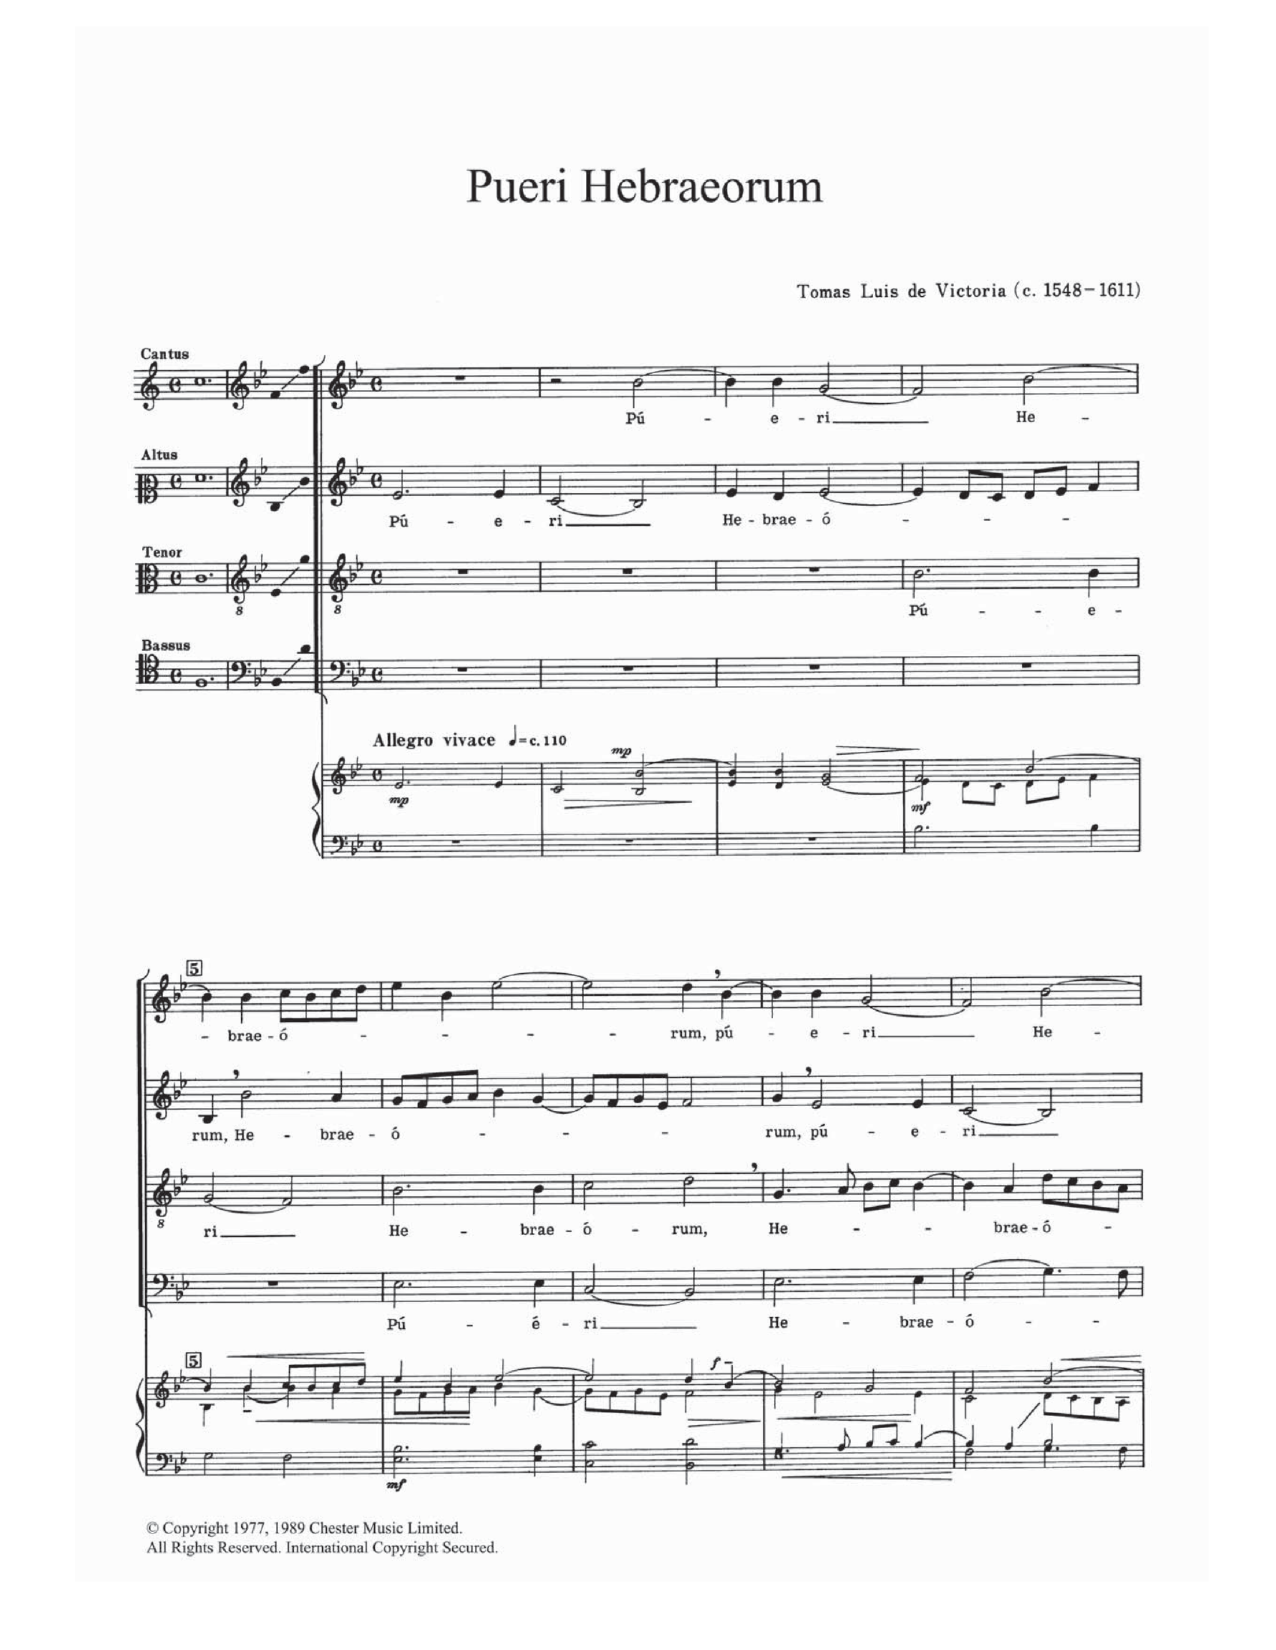 Download Tomas Luis De Victoria Pueri Hebraeorum Sheet Music and learn how to play SATB PDF digital score in minutes